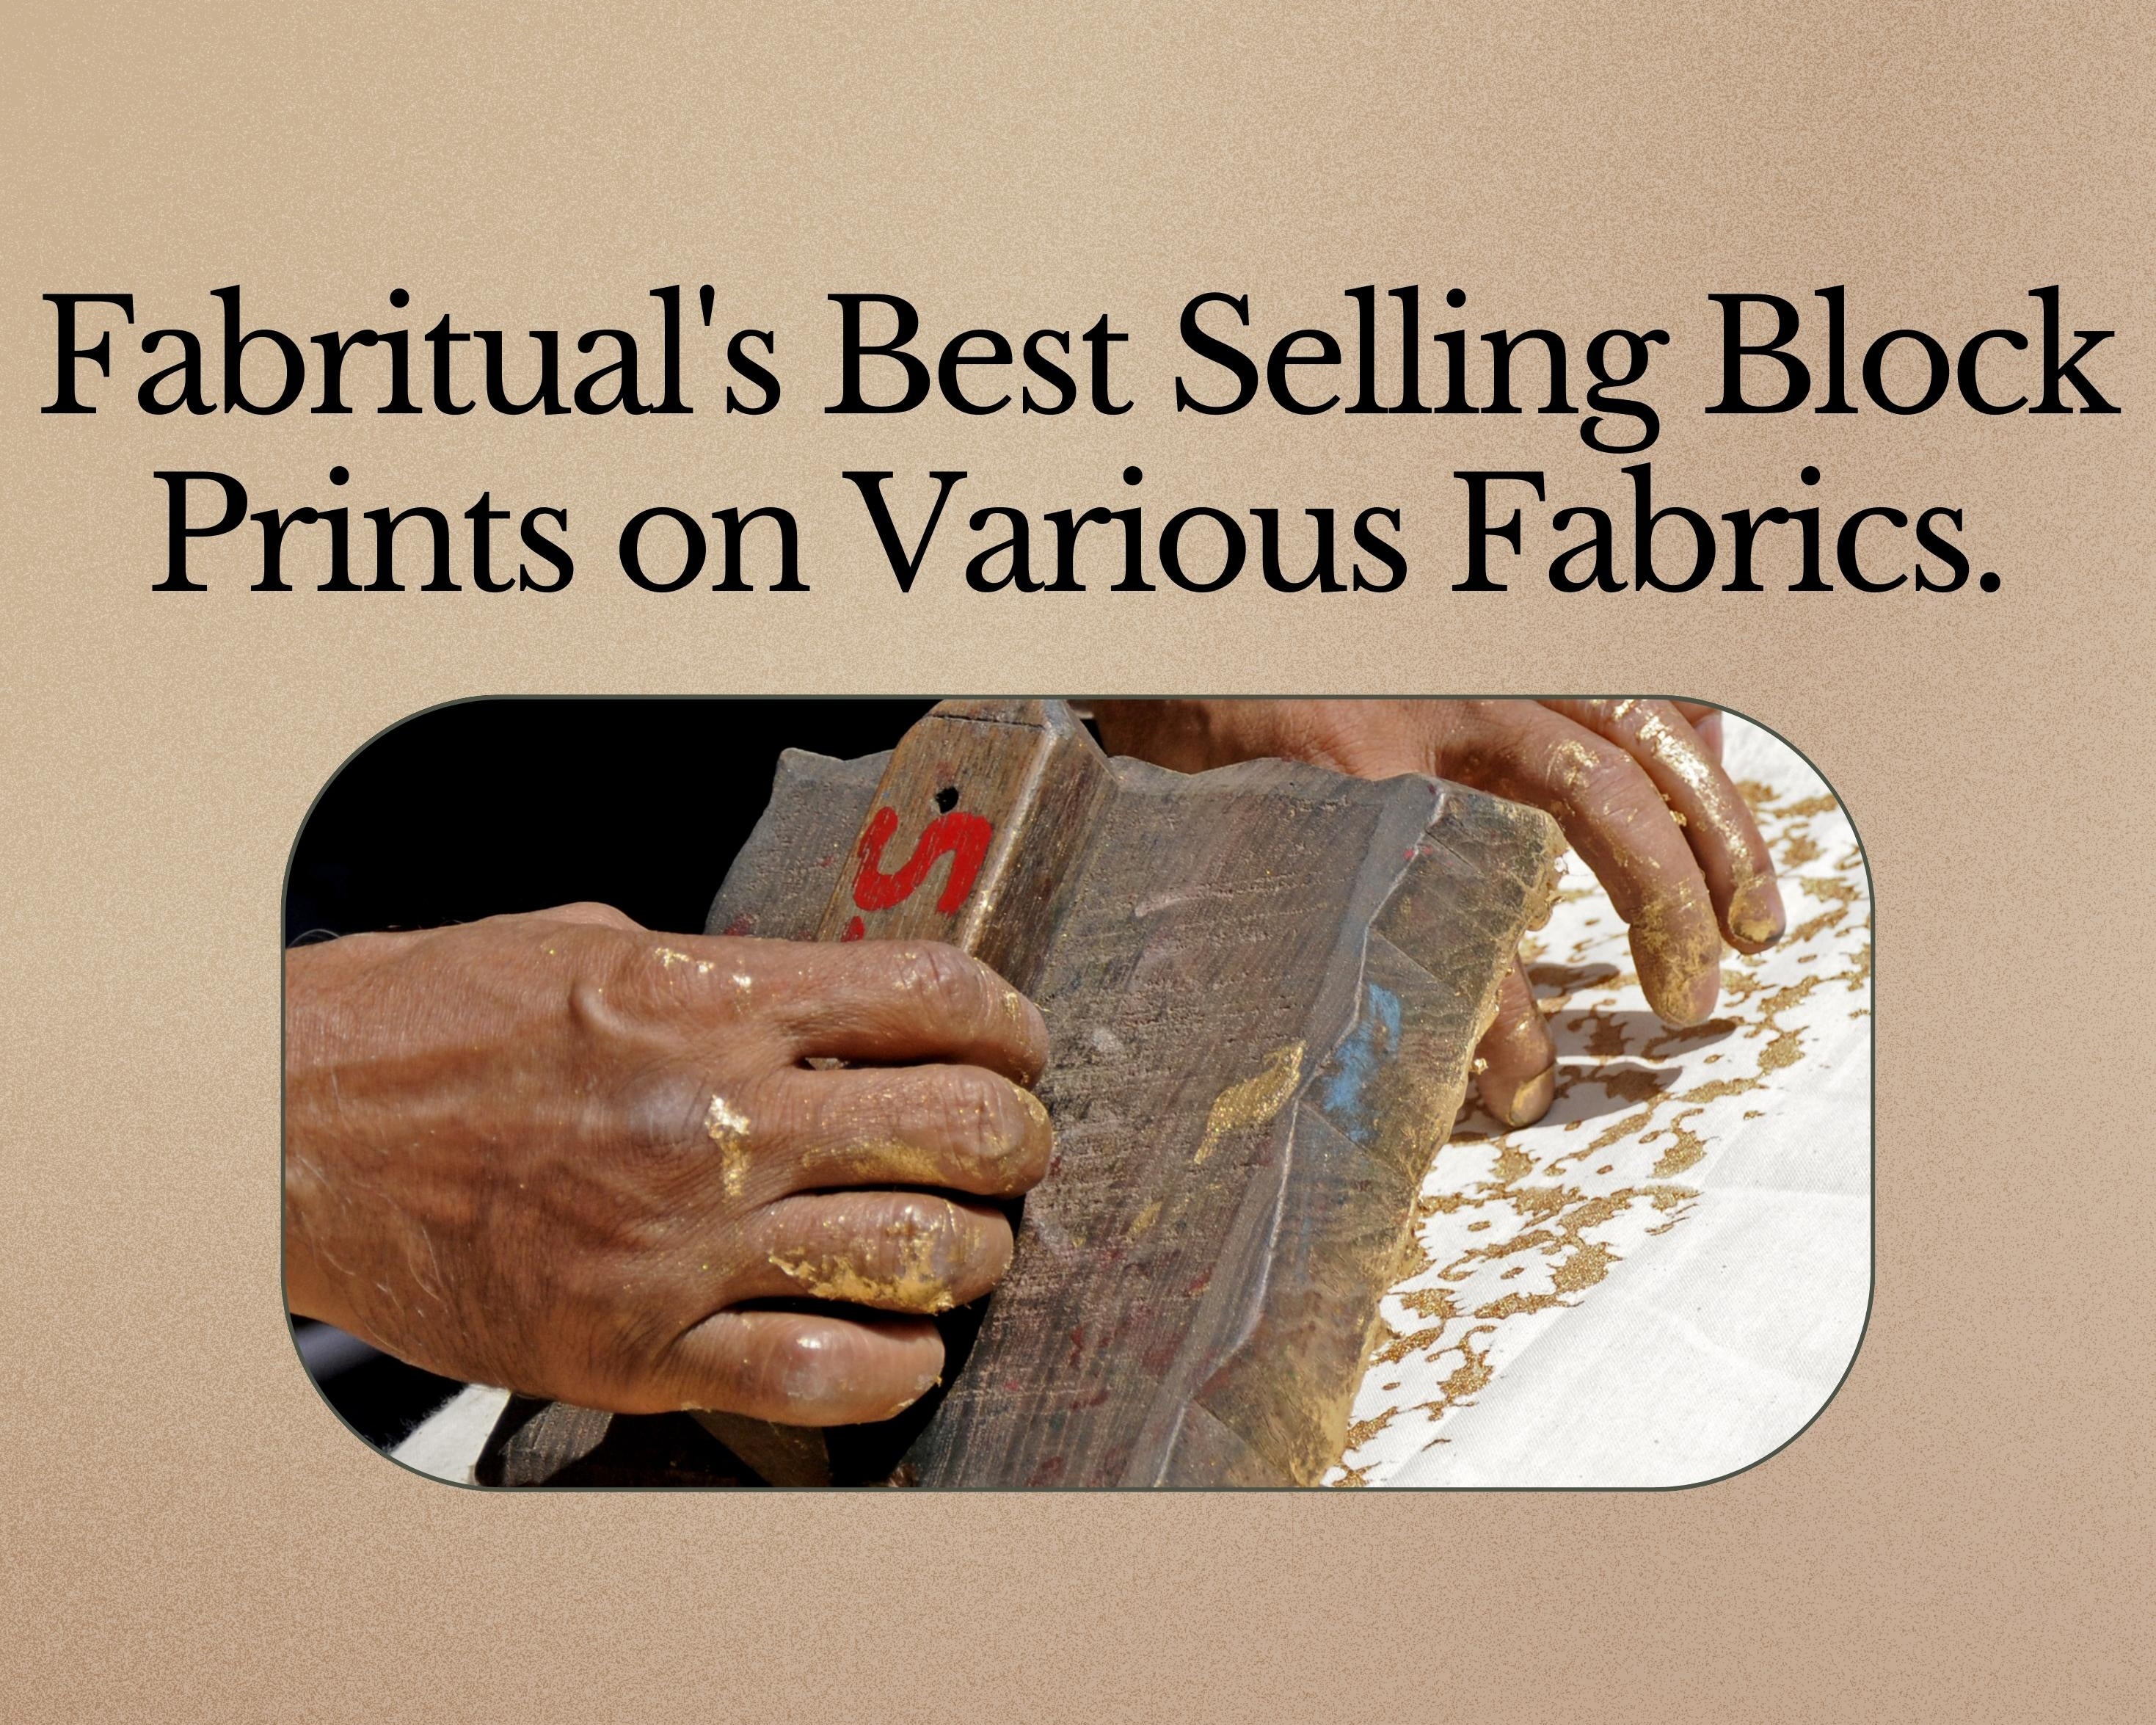 Fabritual's Best Selling Block Prints on Various Fabrics - Fabritual